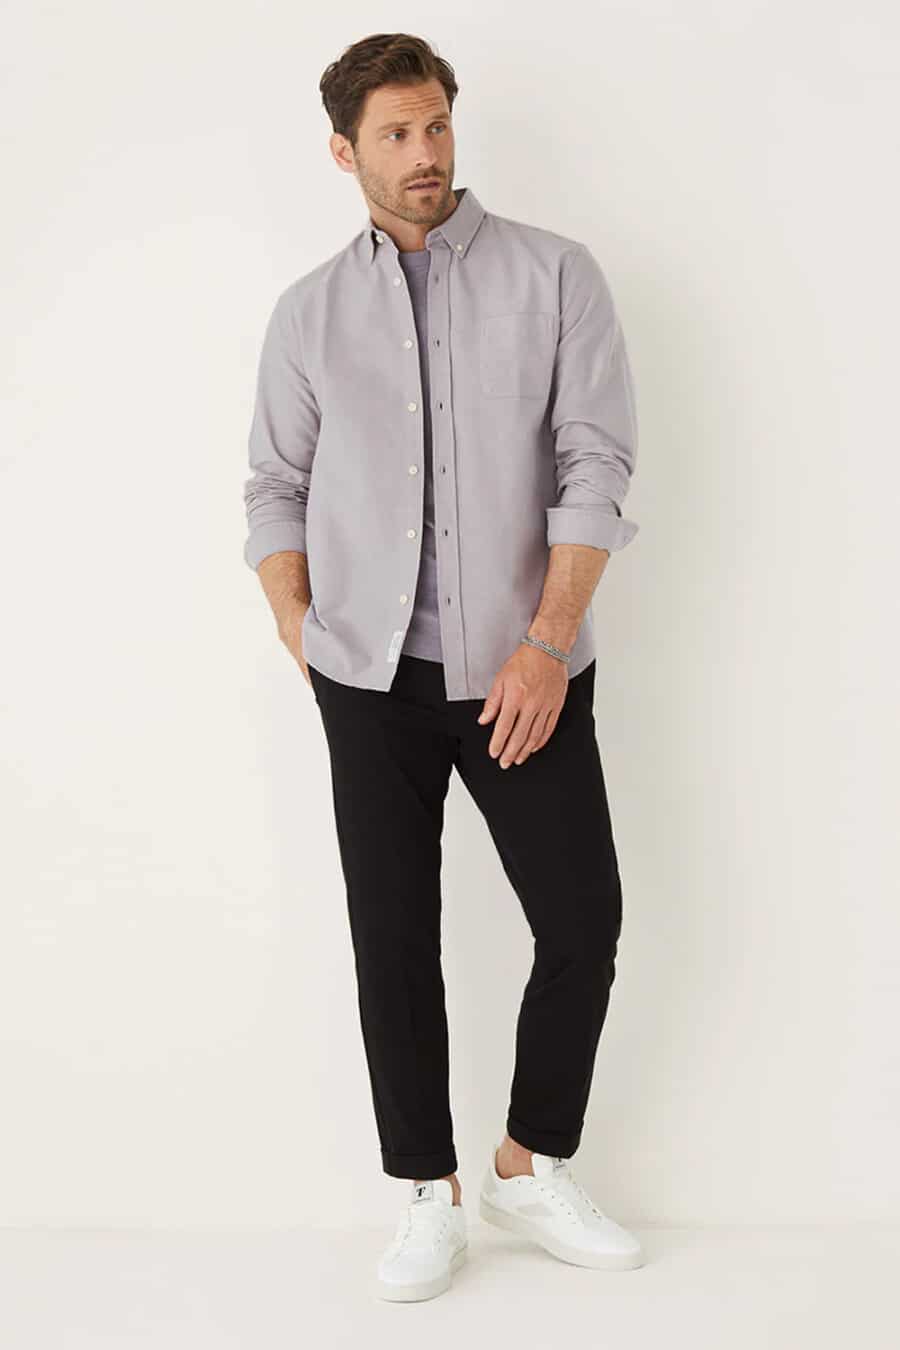 Grey Shirt Matching Pant Ideas | Grey Shirt Combination Pants - TiptopGents-mncb.edu.vn